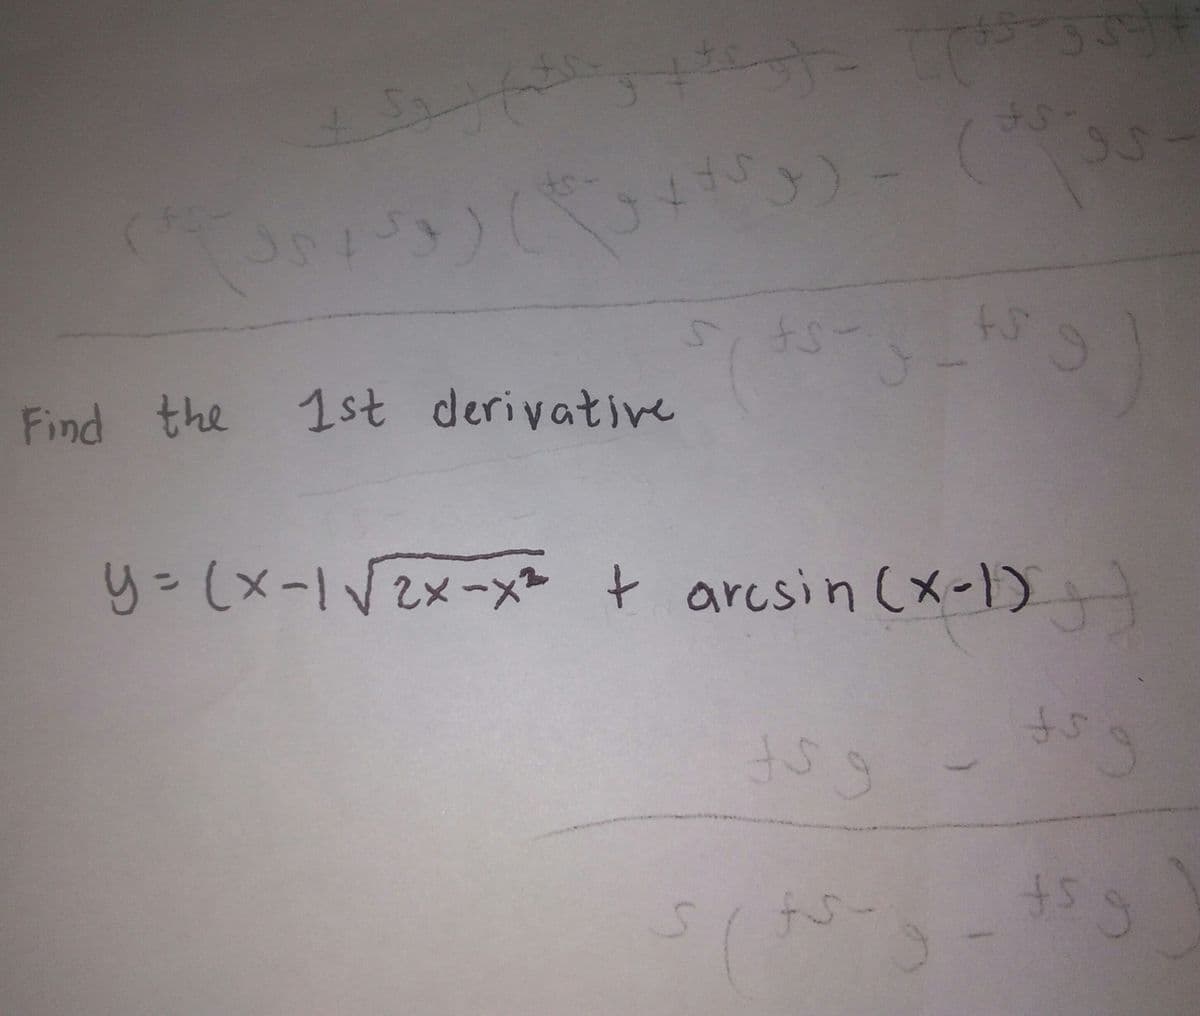 33
33
Find the 1st derivative
りこしxー112メーメ+
arcsin (x-1)
4-
